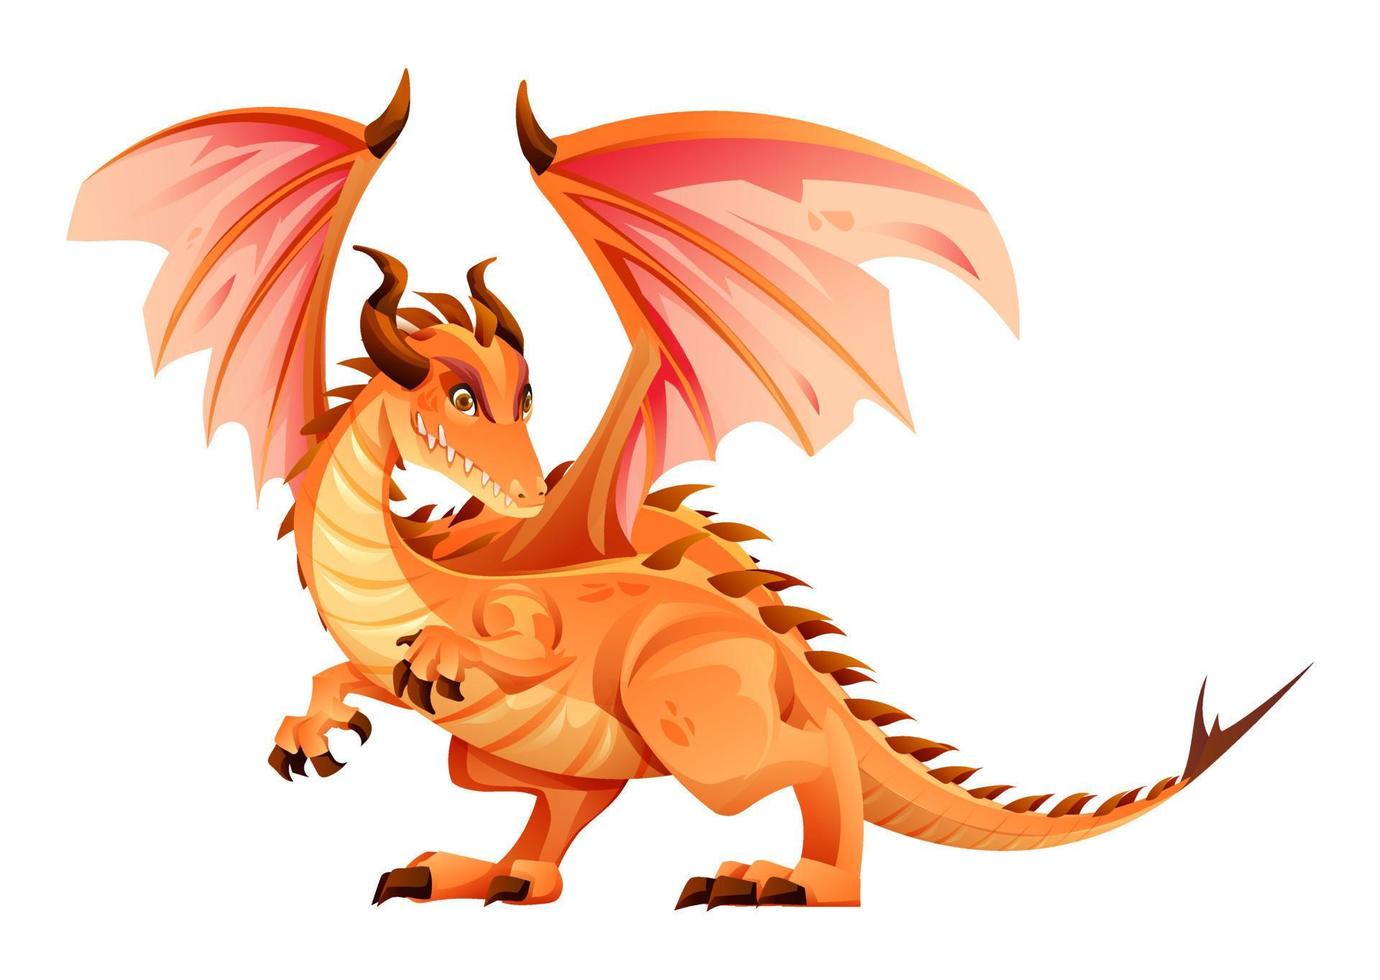 personnage de dragon en style cartoon vecteur